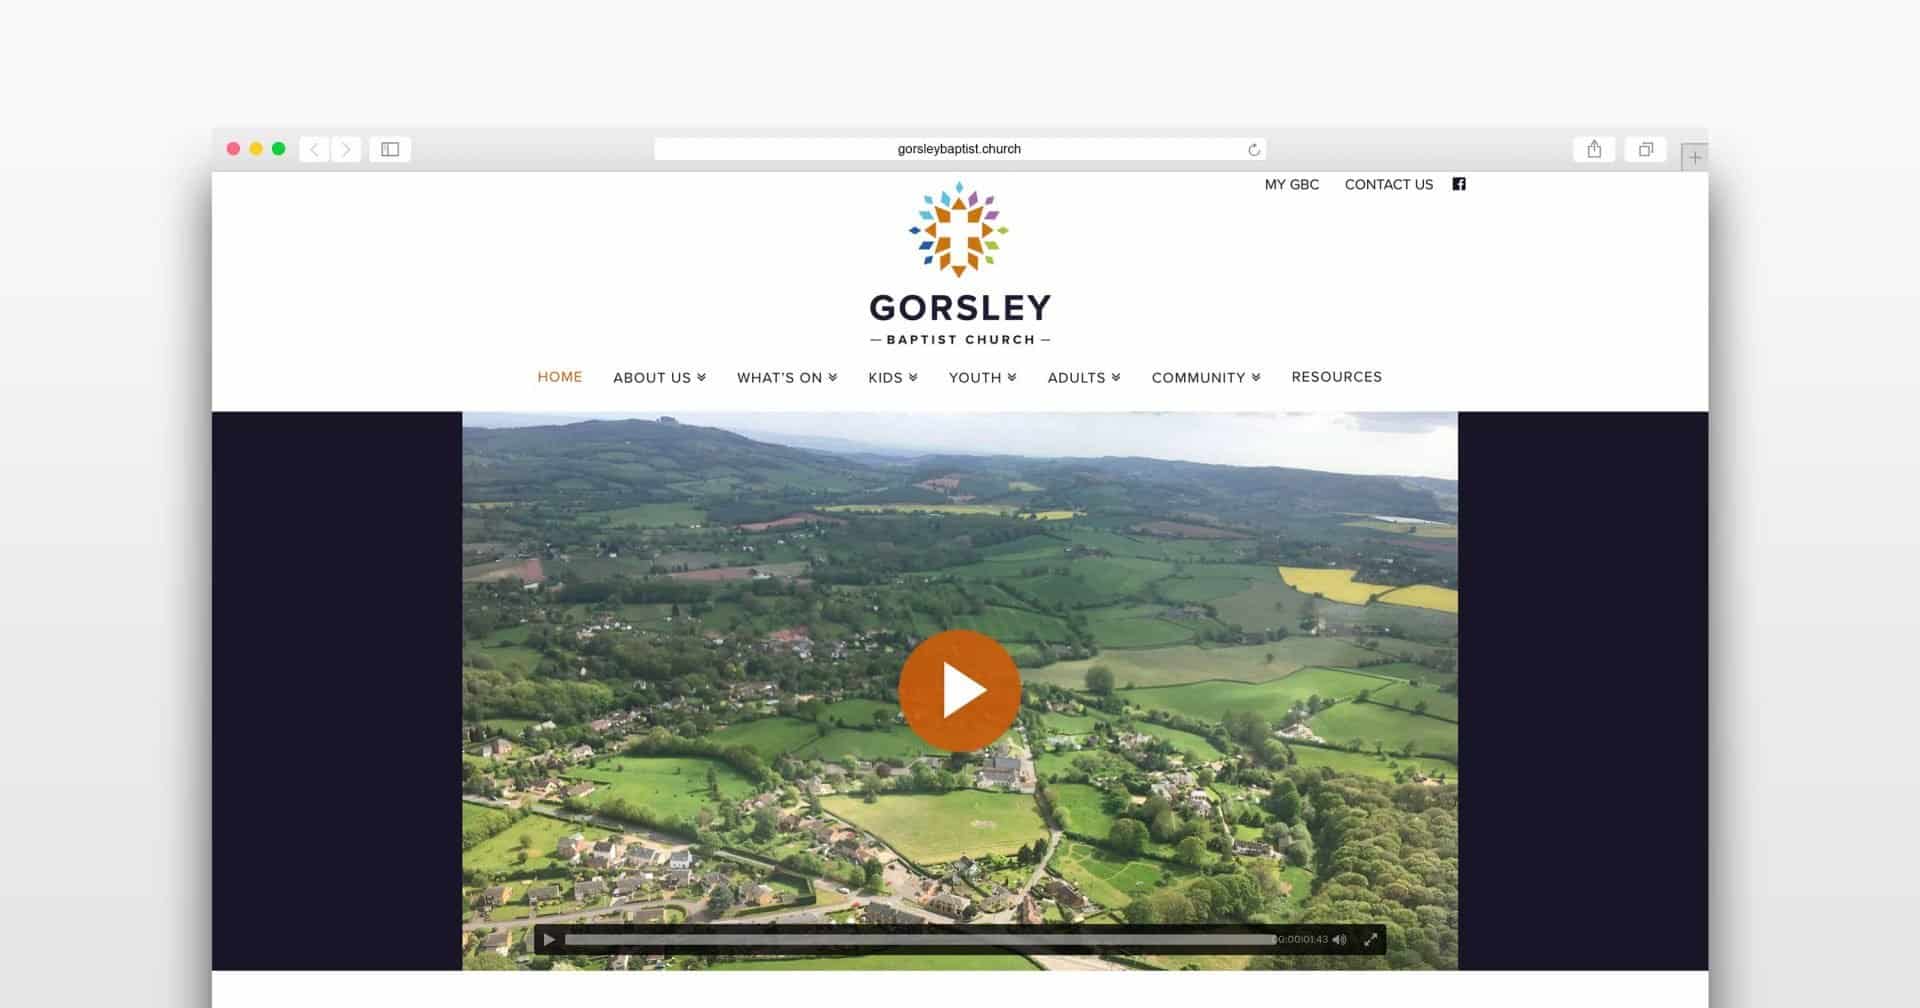 Gorsley Baptist Church website image